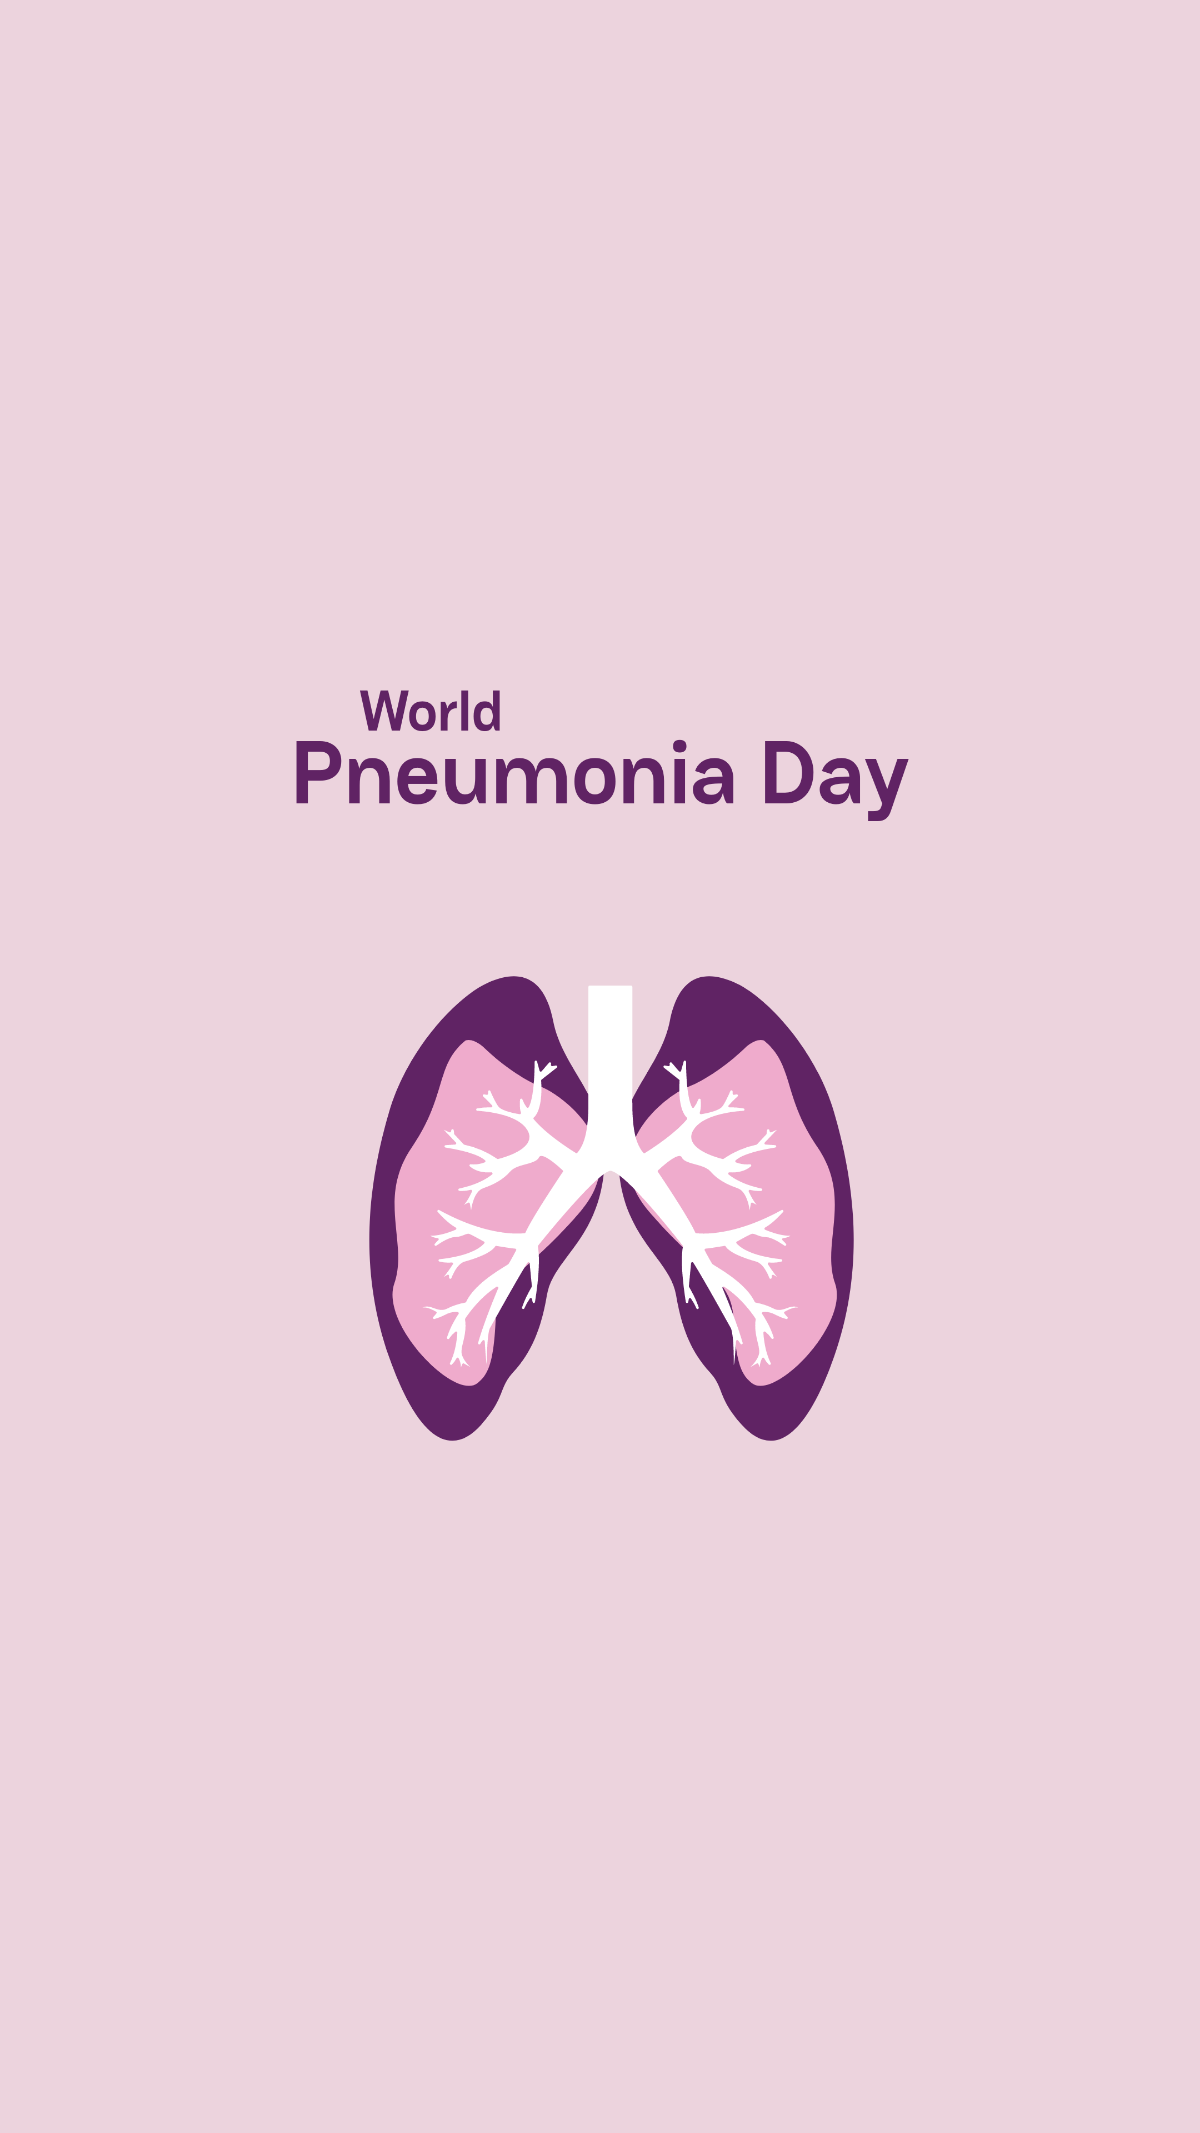 Free World Pneumonia Day iPhone Background Template